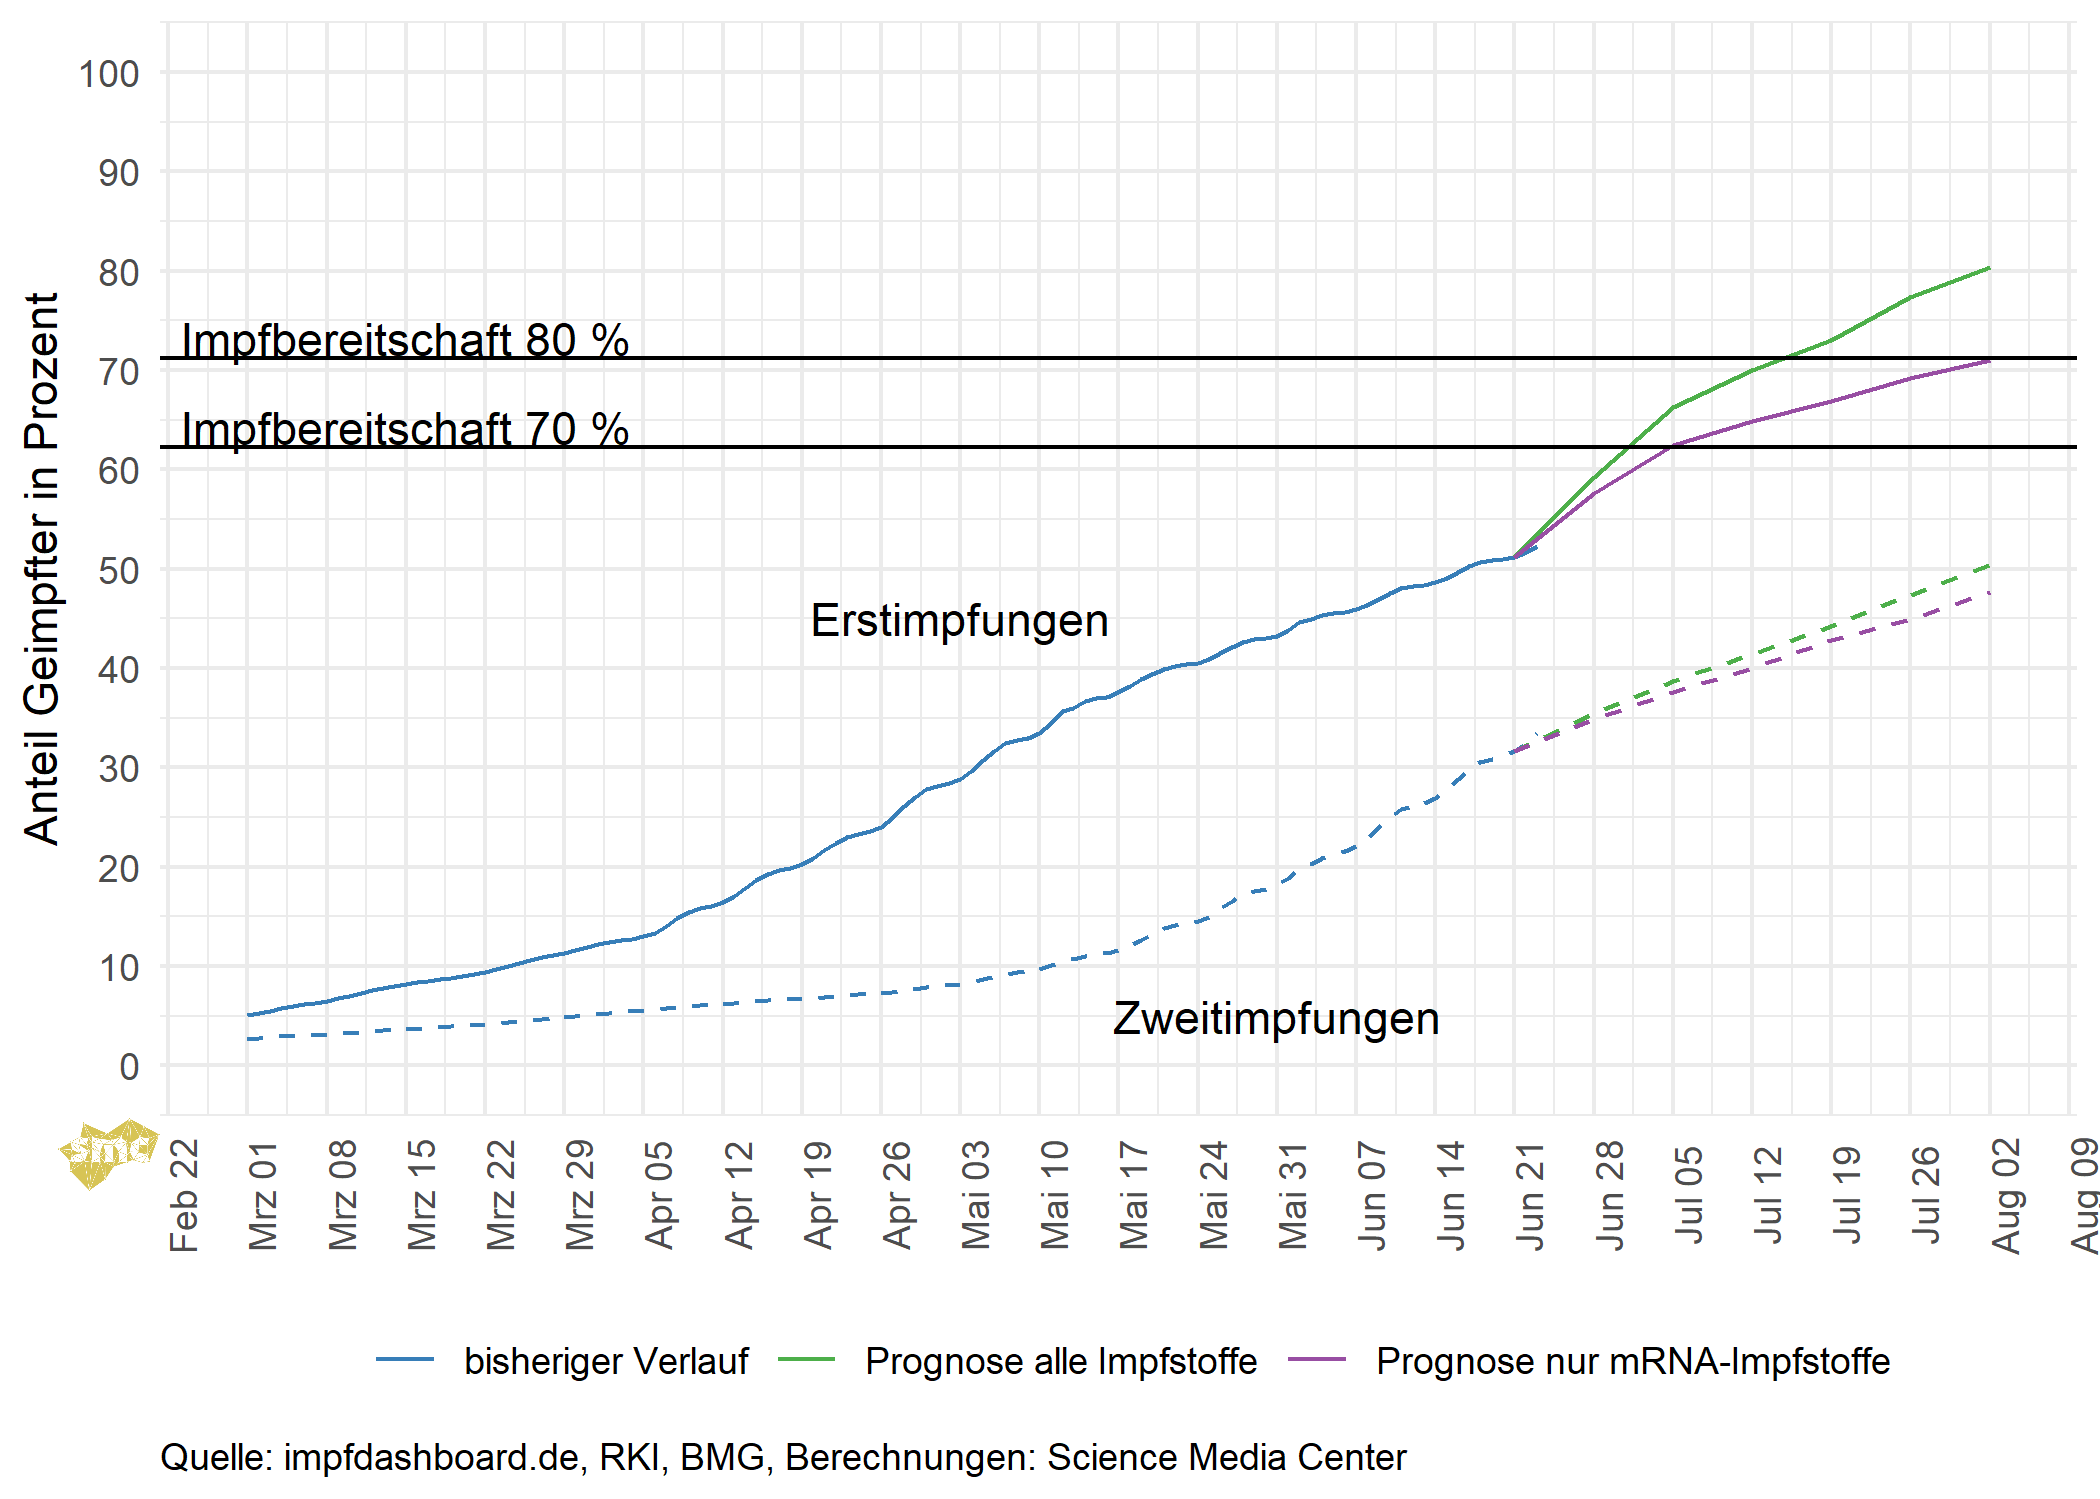 2021-06-24_Impfungen_Prognosen.png